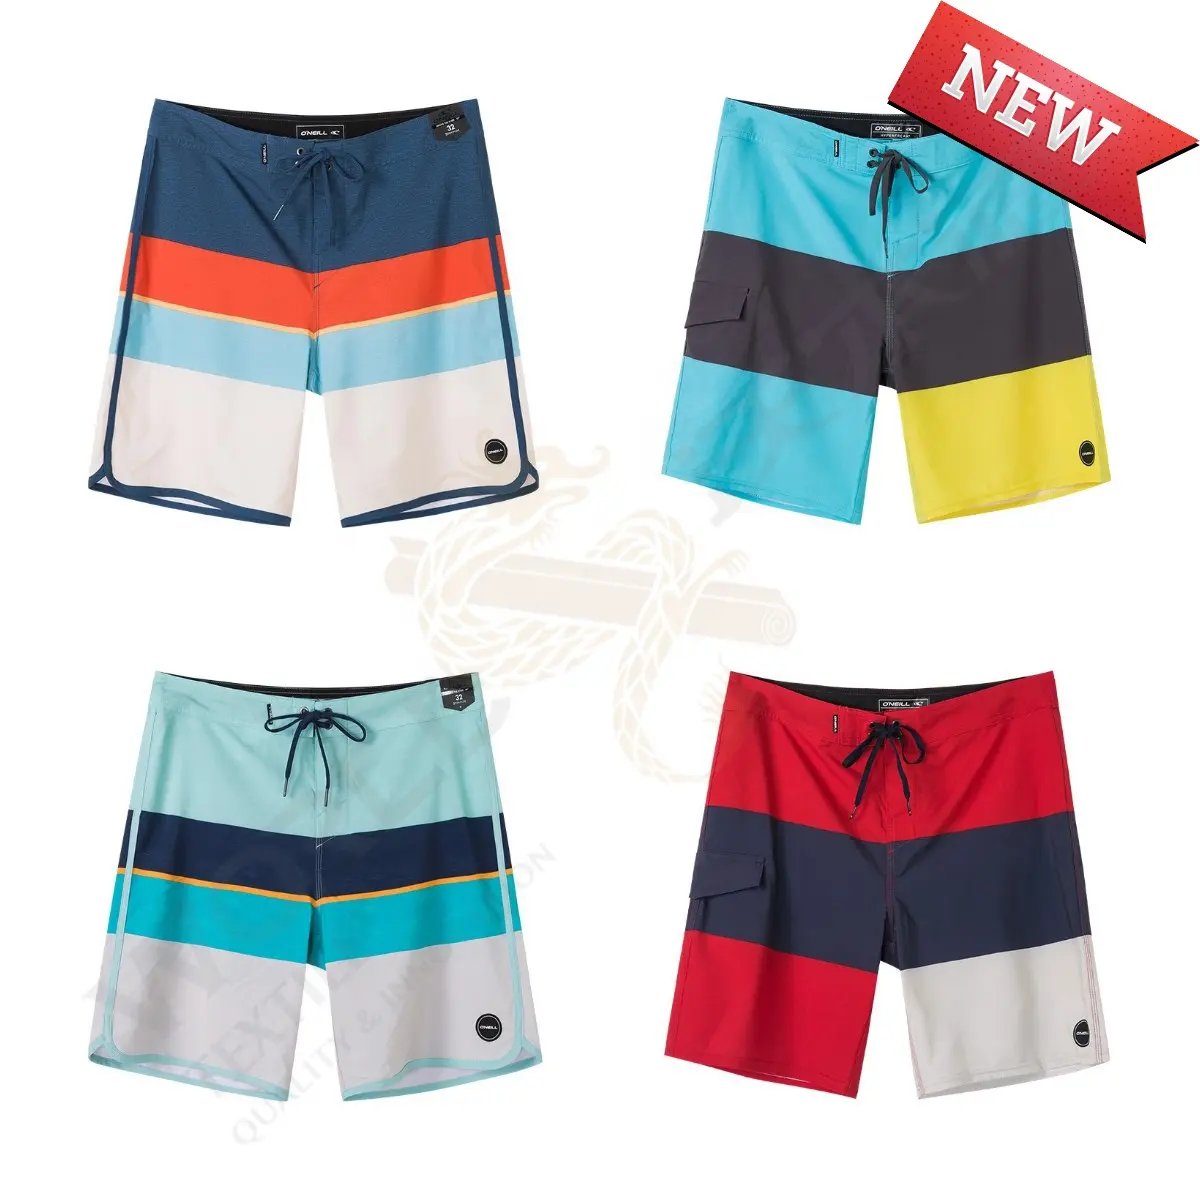 Custom men's board shorts fitted beach surf board shorts wholesale make your own board shorts